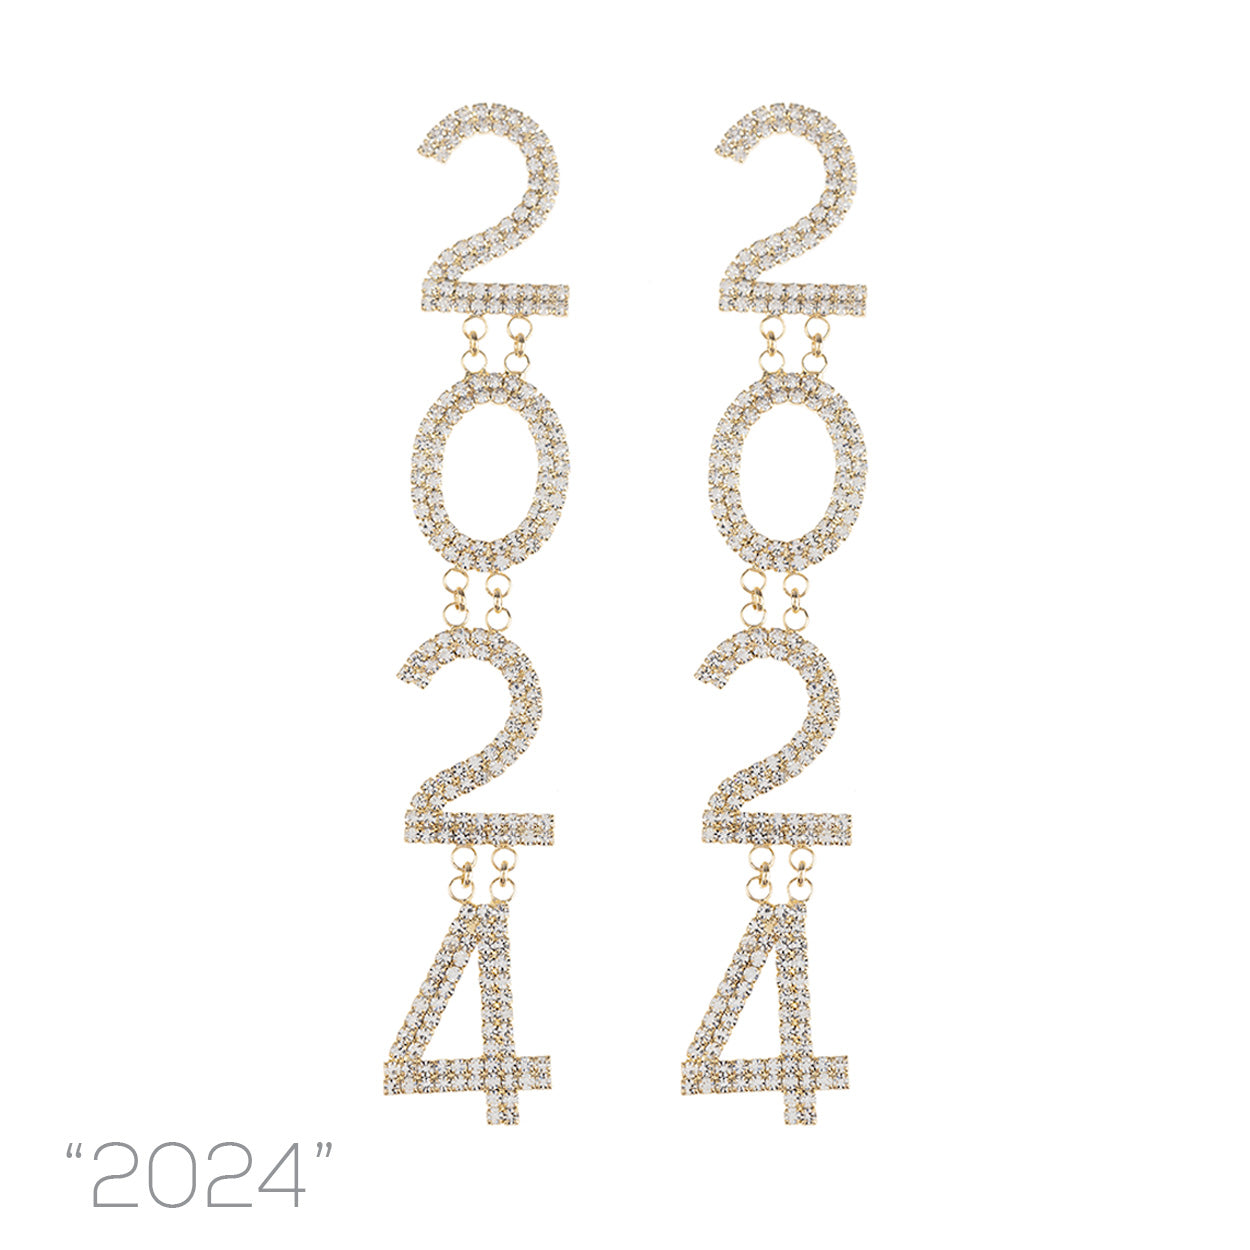 2024 New Year's Dangle Drop Post Earrings - In Gold & Silver